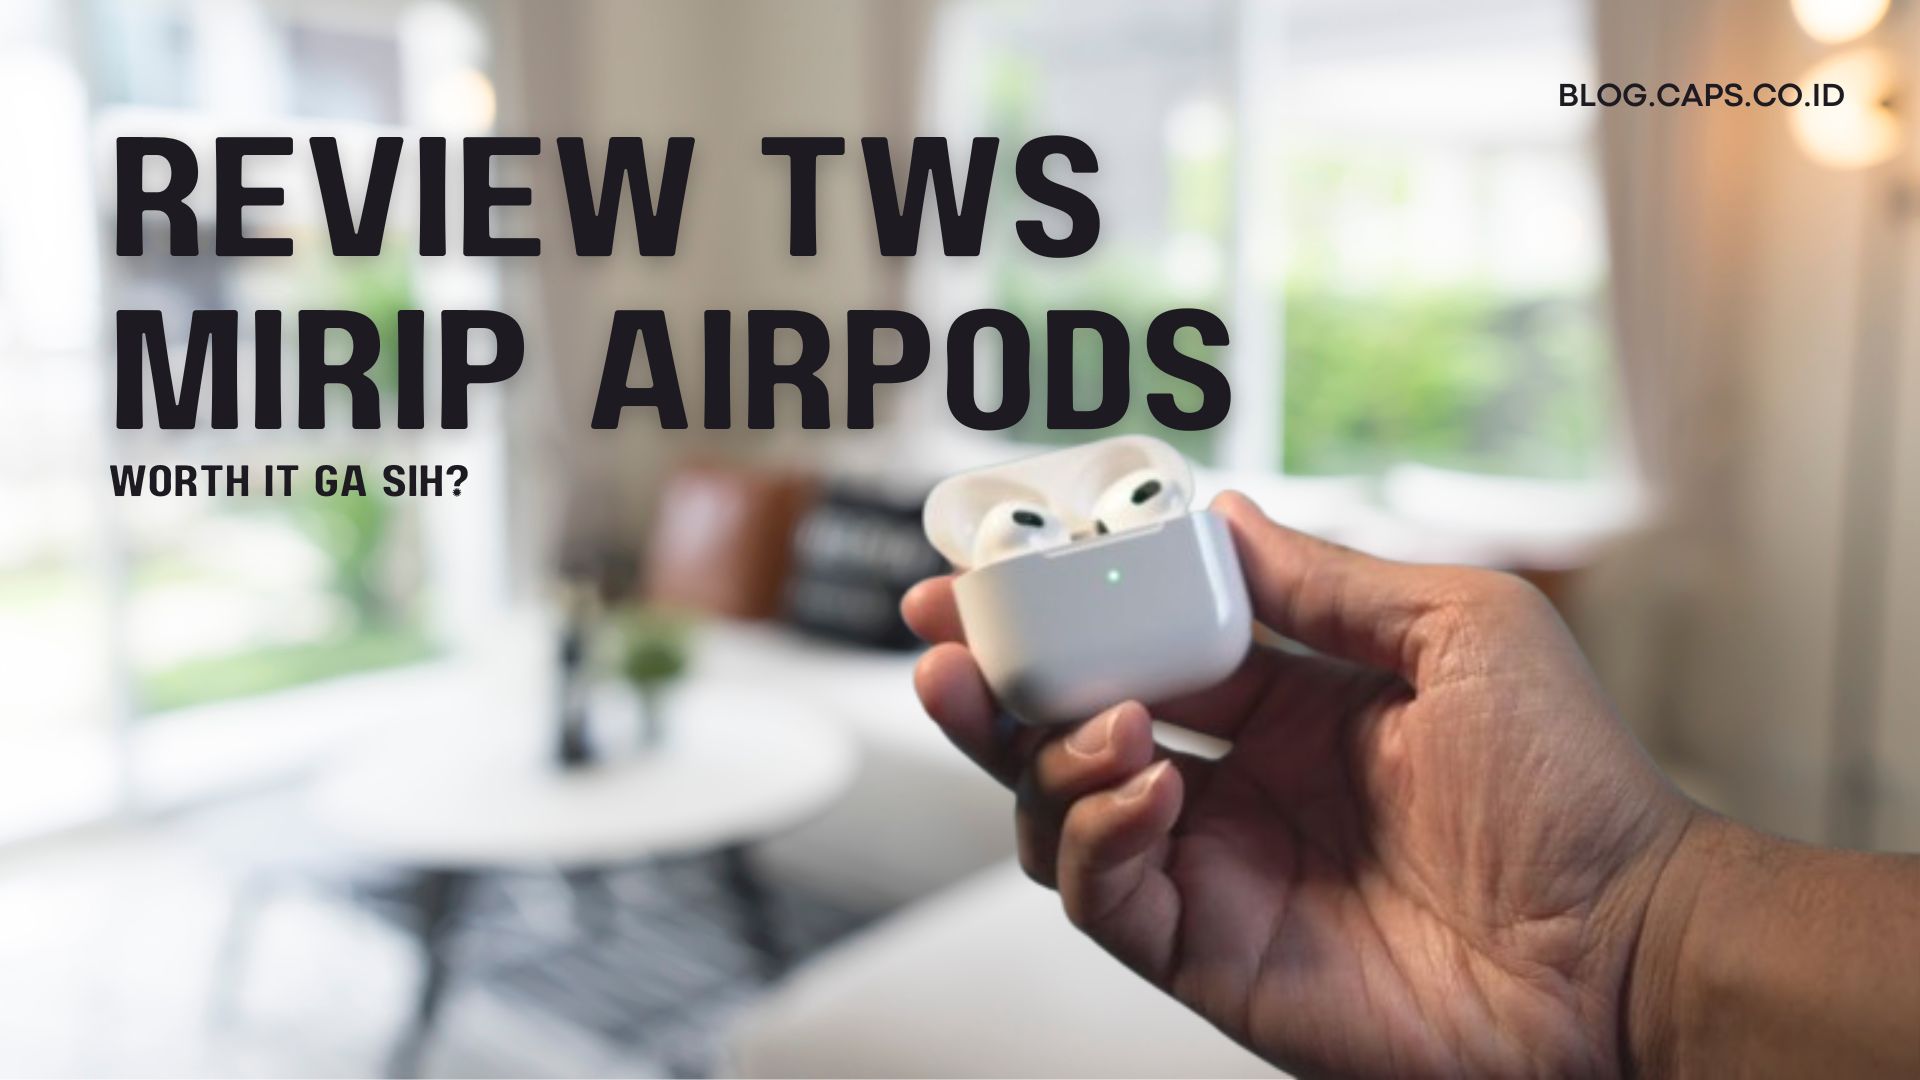 Review TWS Mirip AirPods, Worth It Ga Sih?